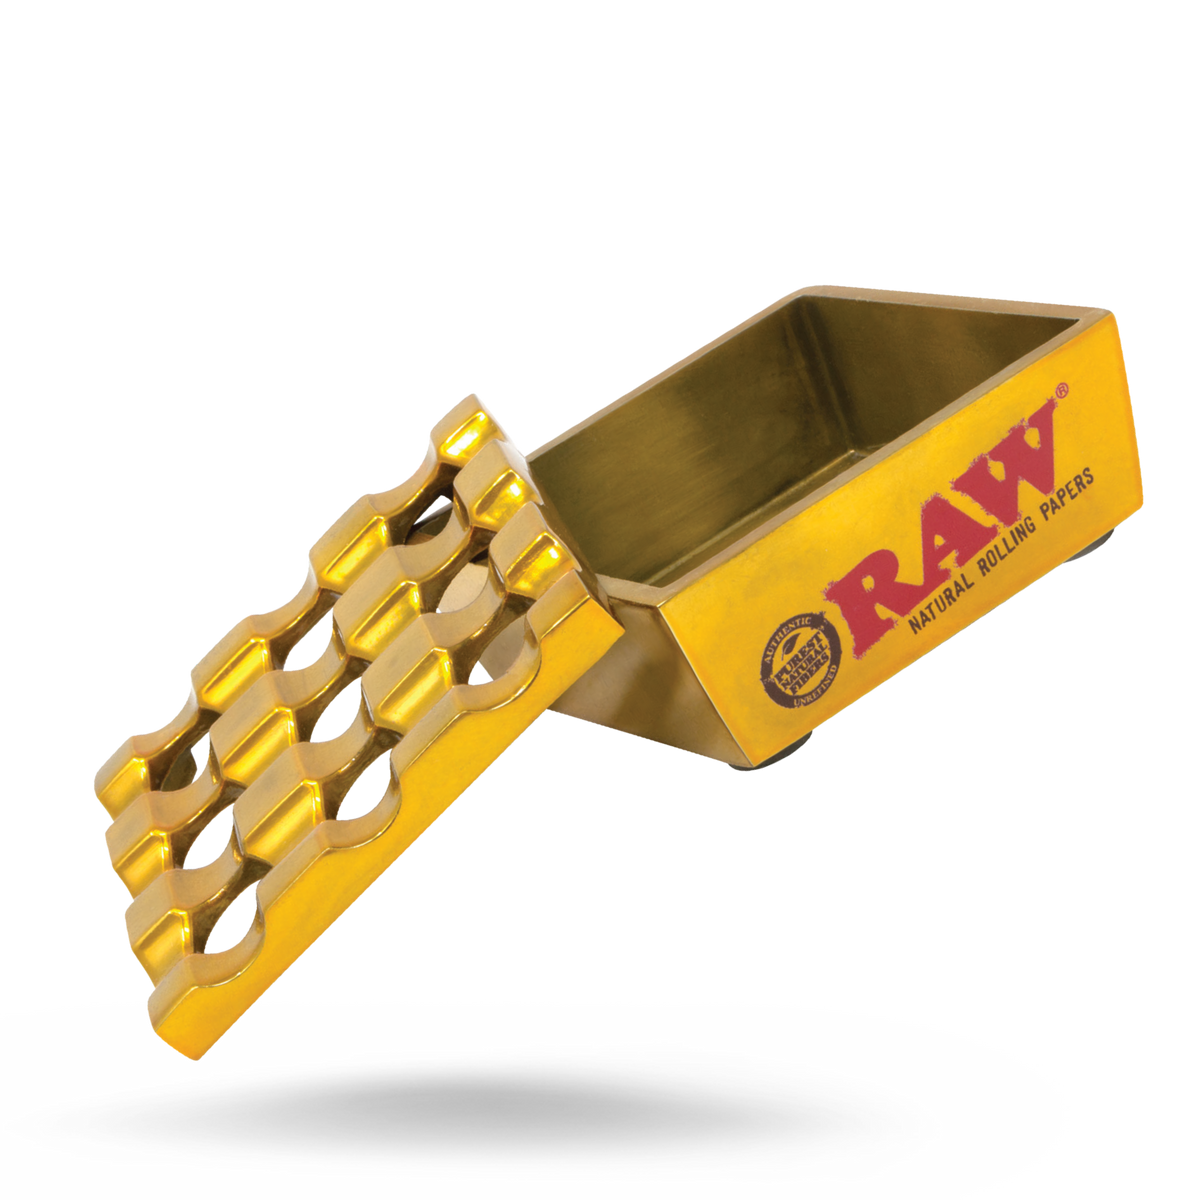 RAW VanASH Tray Rolling Trays RAWU-RAAS-0008 esd-official